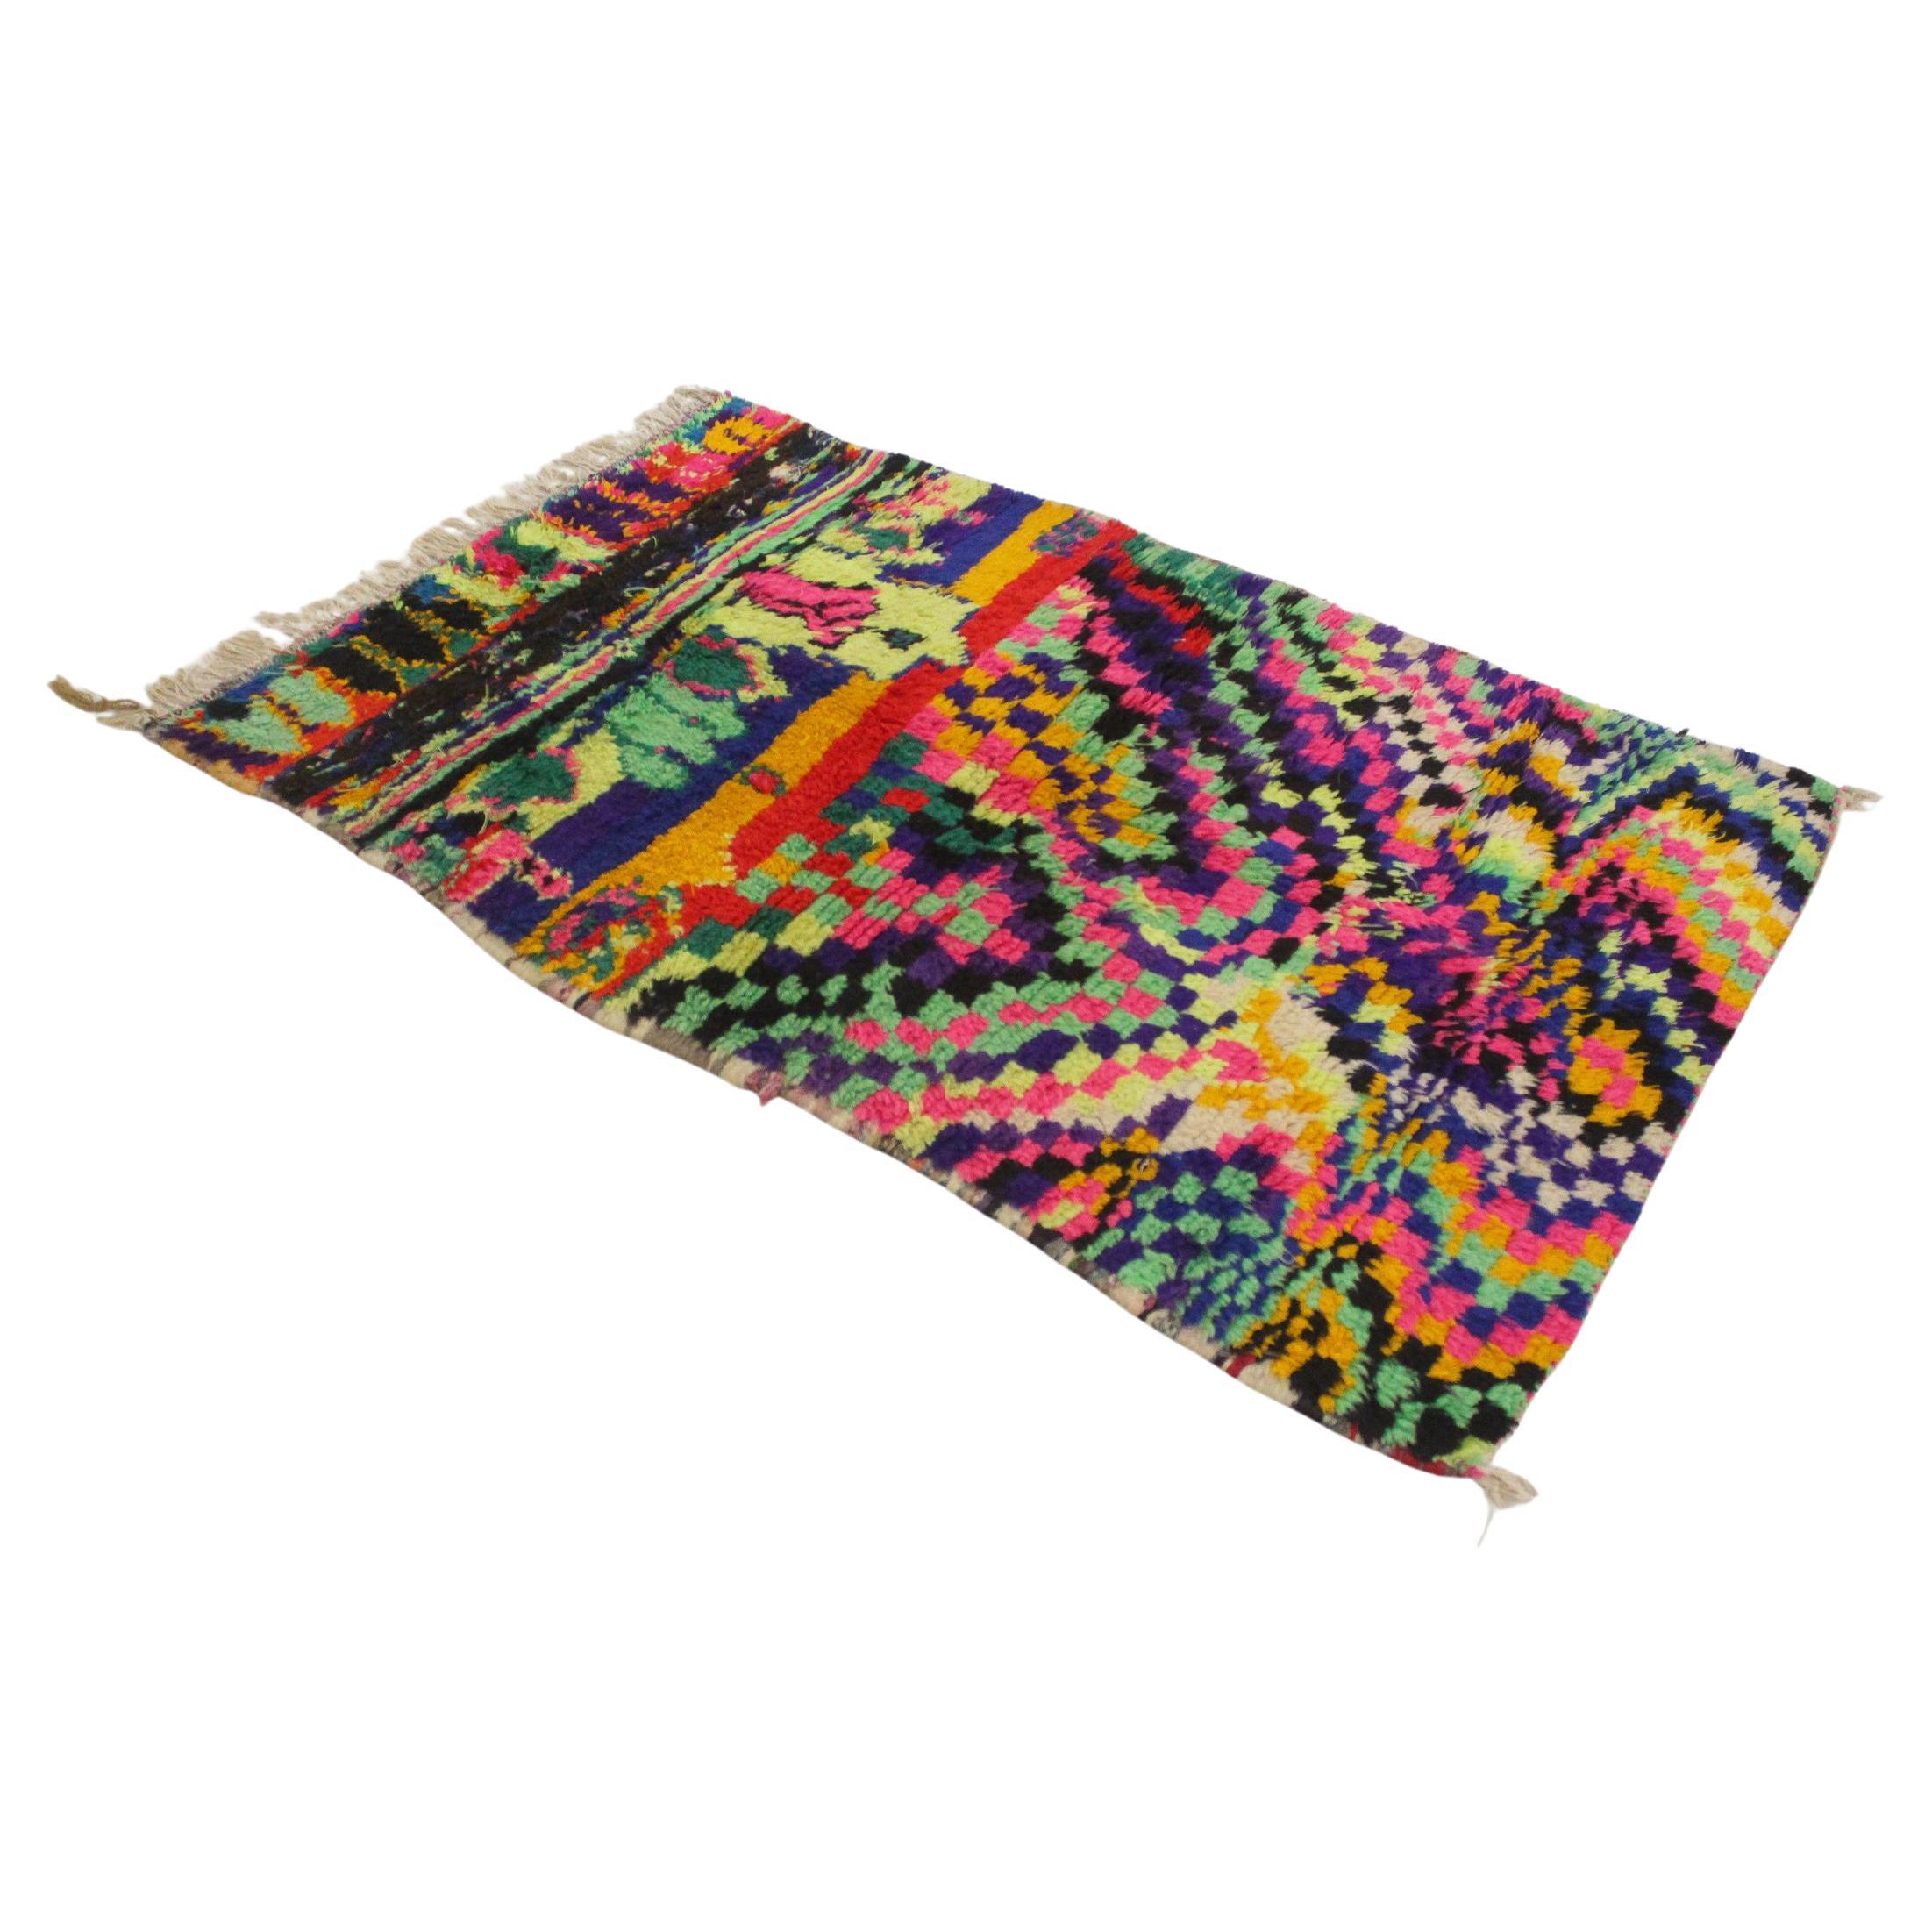 Vintage Moroccan Azilal rug - Neon colors - 3.1x4.6feet / 96x141cm